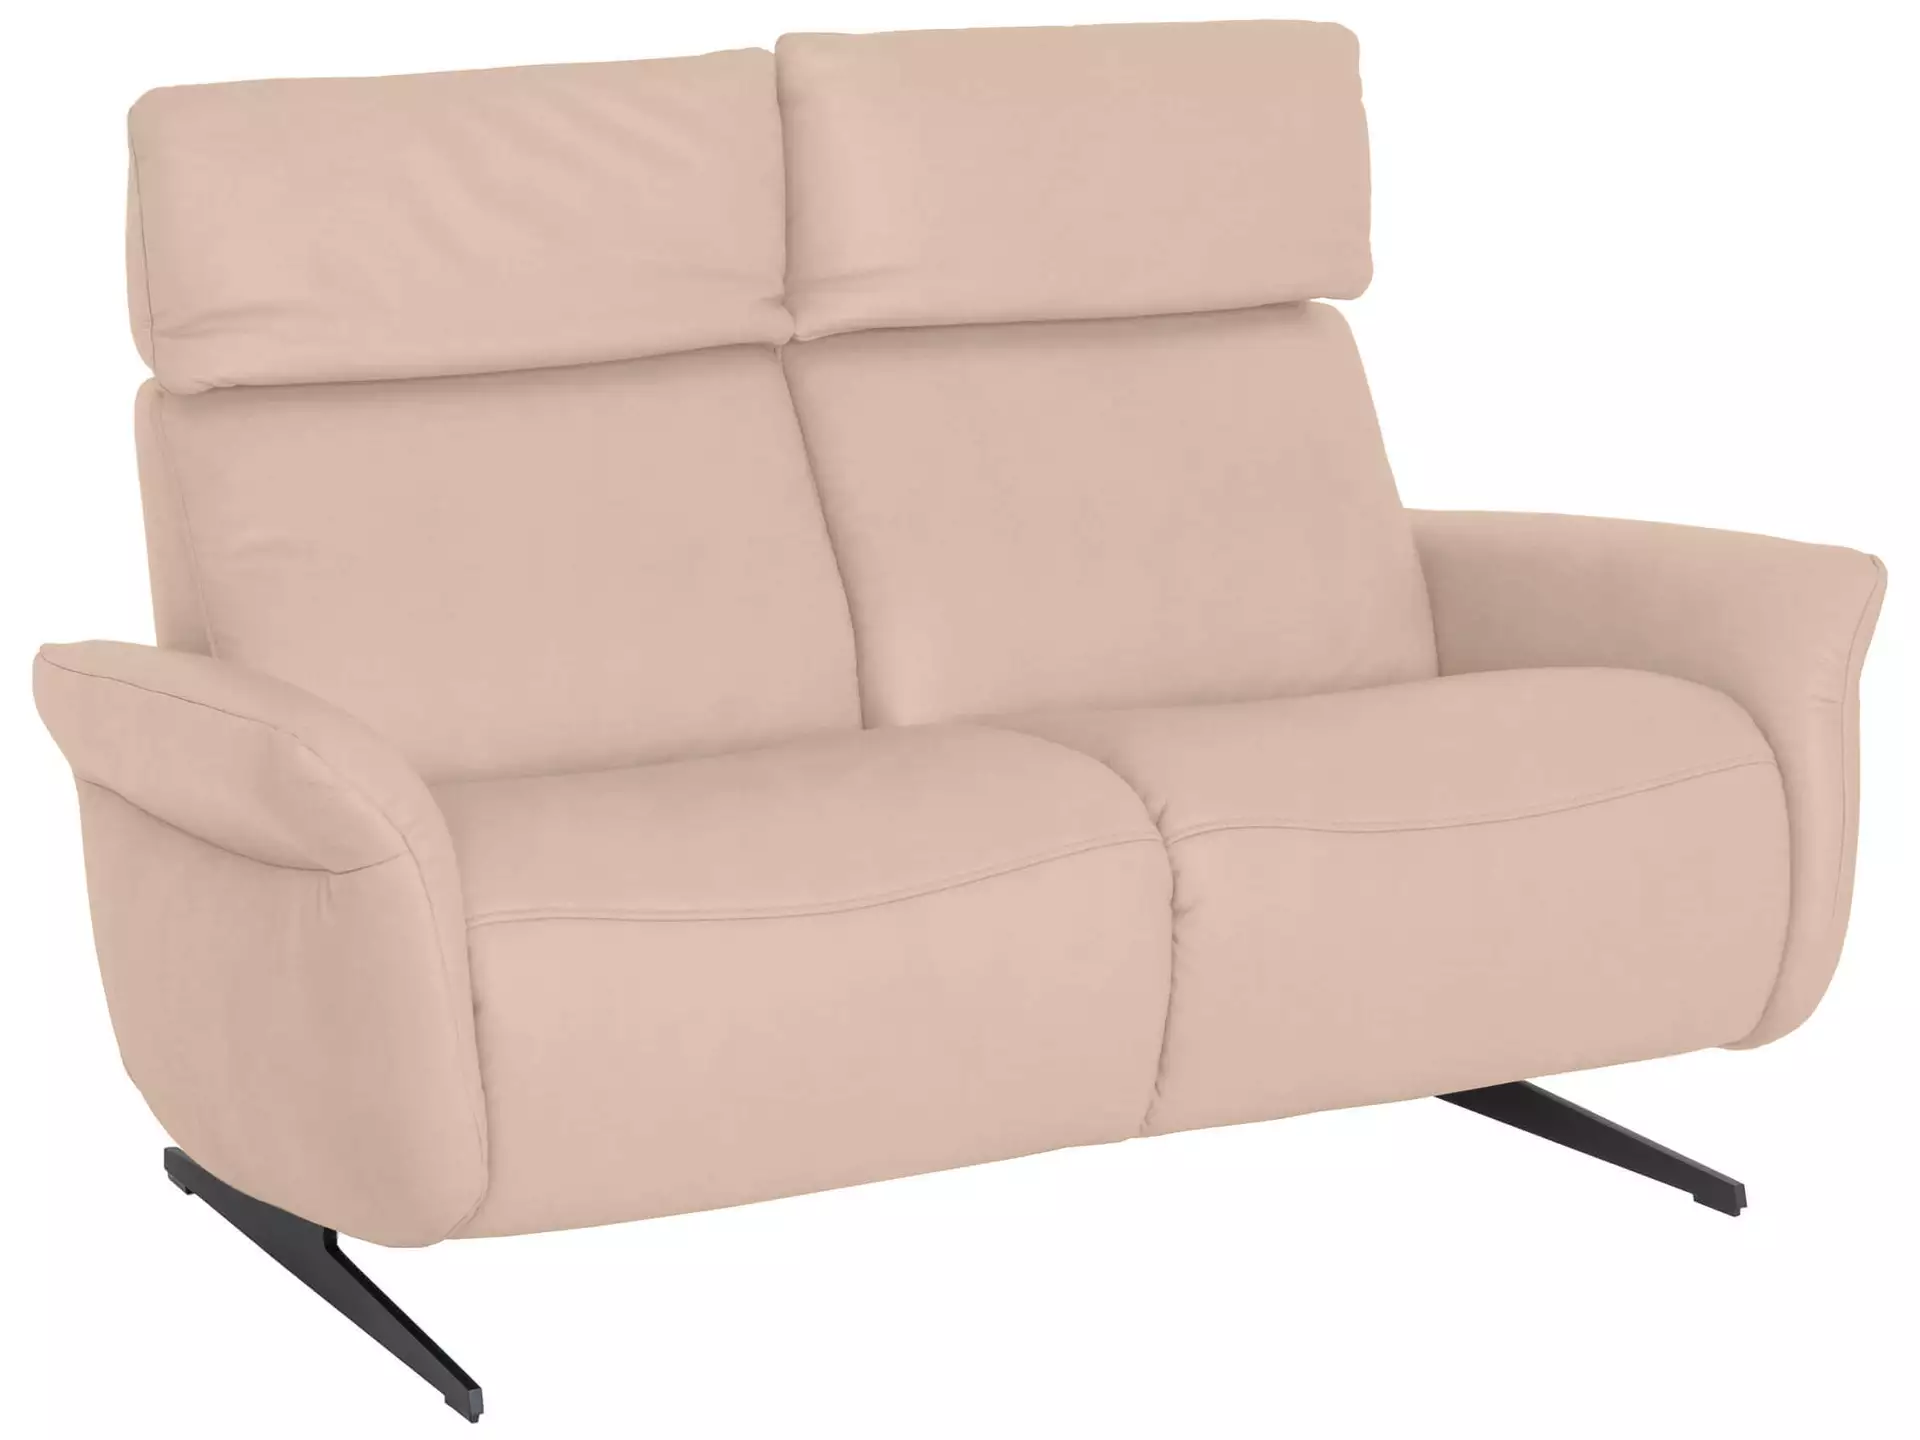 Sofa Patricia Basic B: 149 cm Himolla / Farbe: Kiesel / Material: Stoff Basic